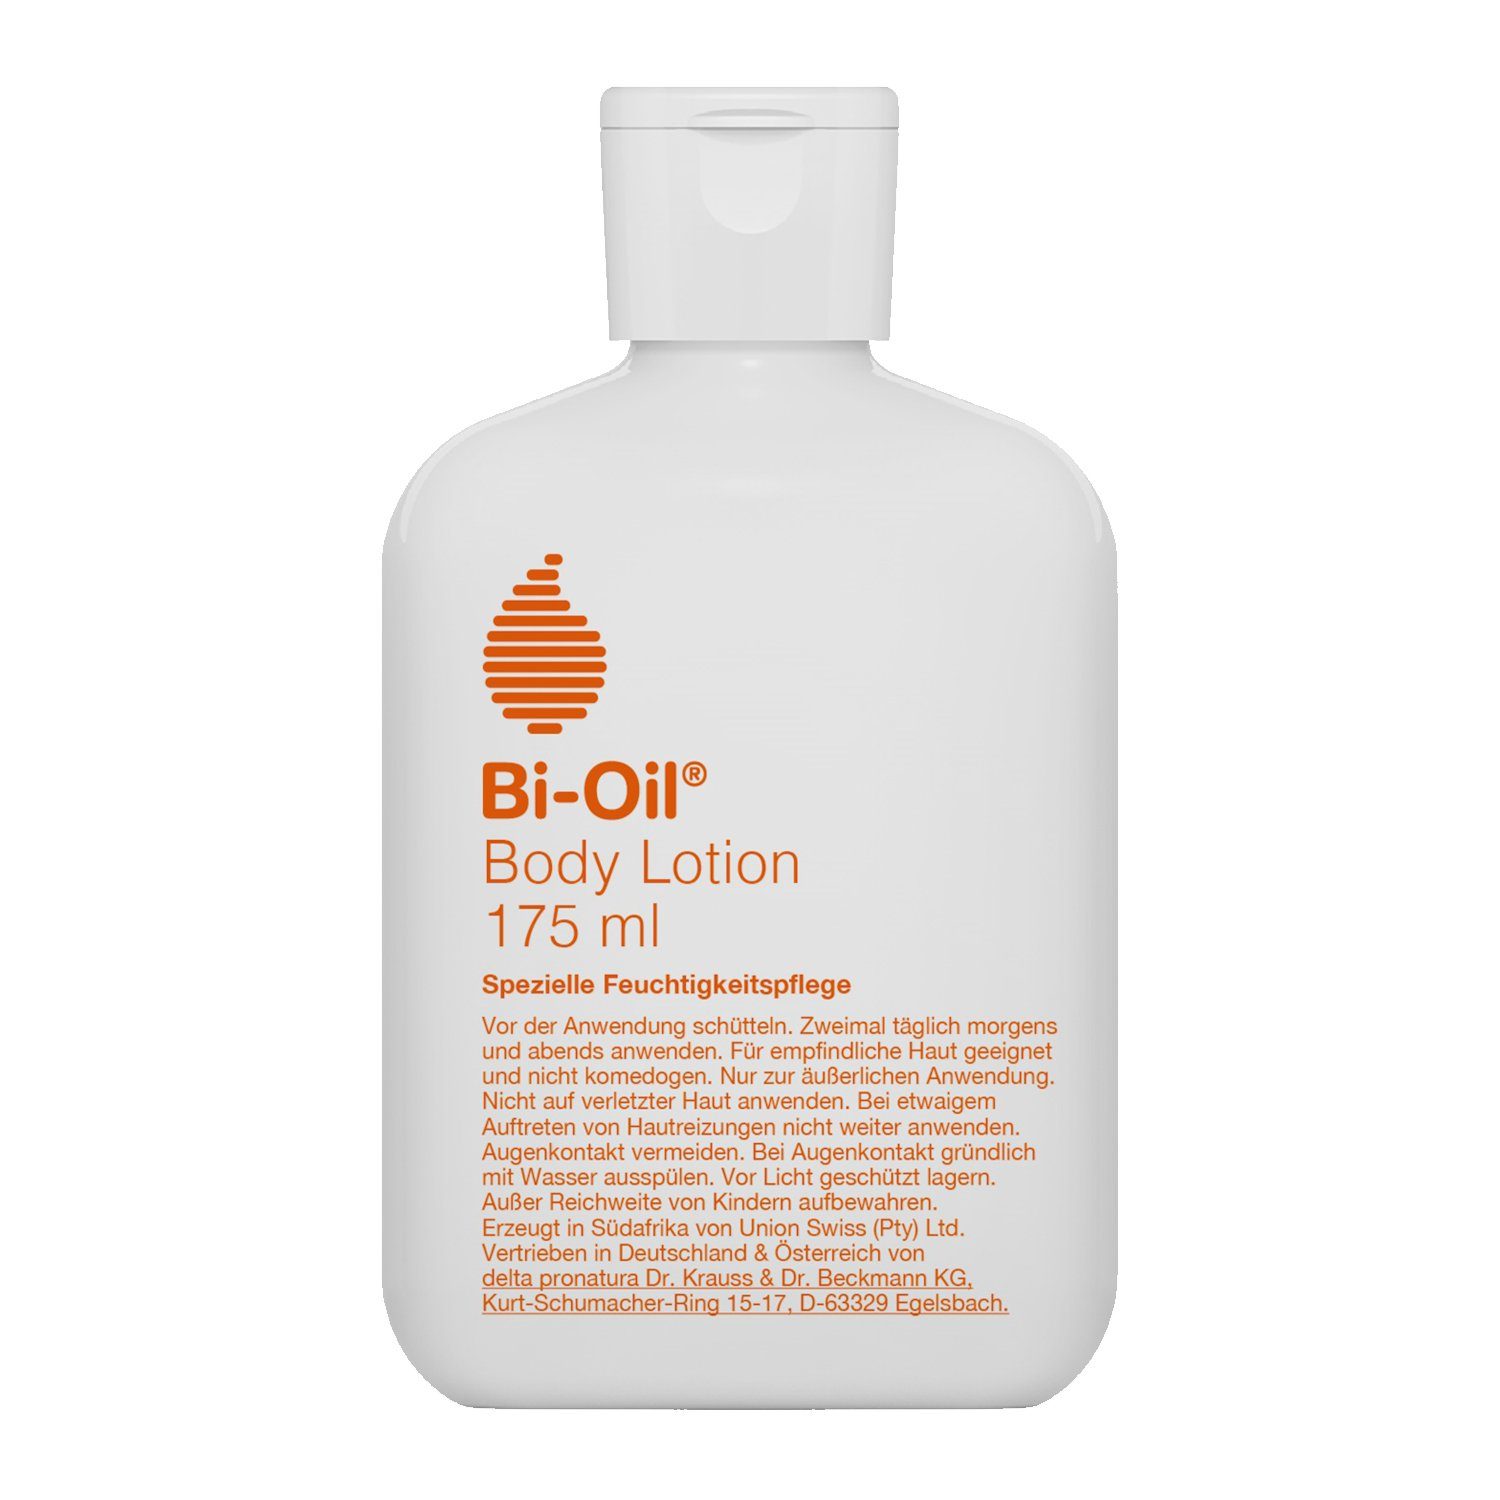 BI-OIL Körperlotion feuchtigkeitsspendende Body Lotion 175 ml - 2-Phasen  Bodylotion vegan,